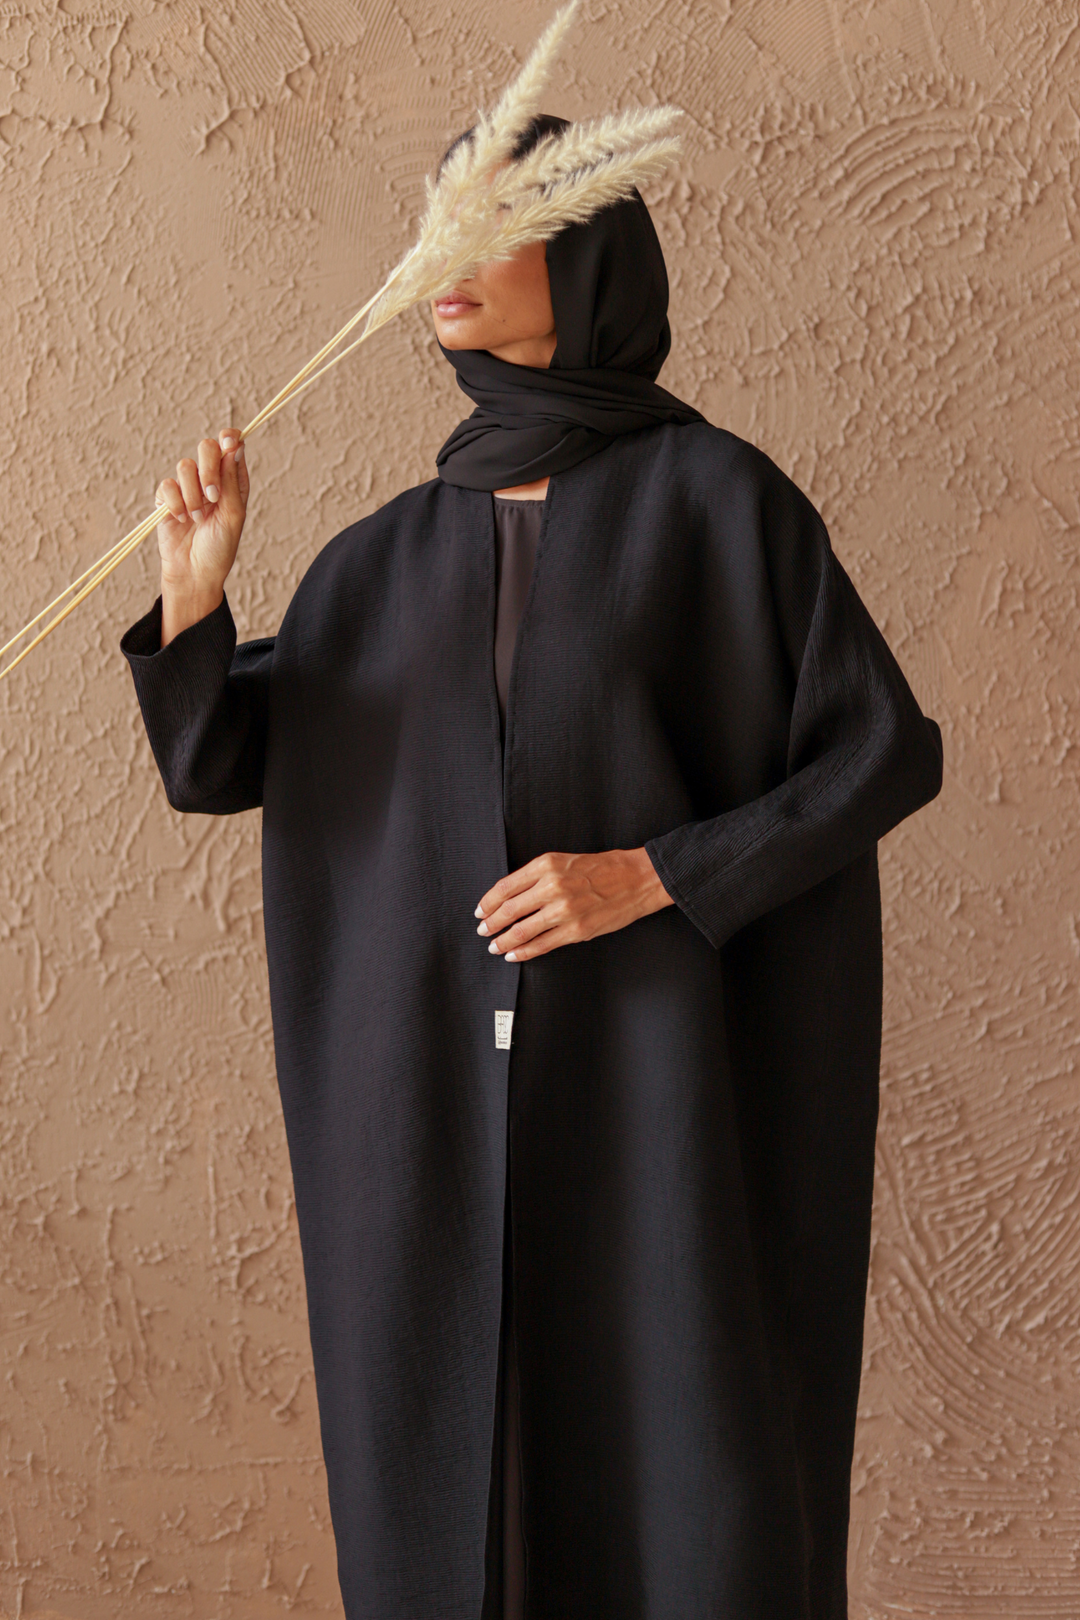 Basic Corduroy (Black Abaya) - Ready to Wear